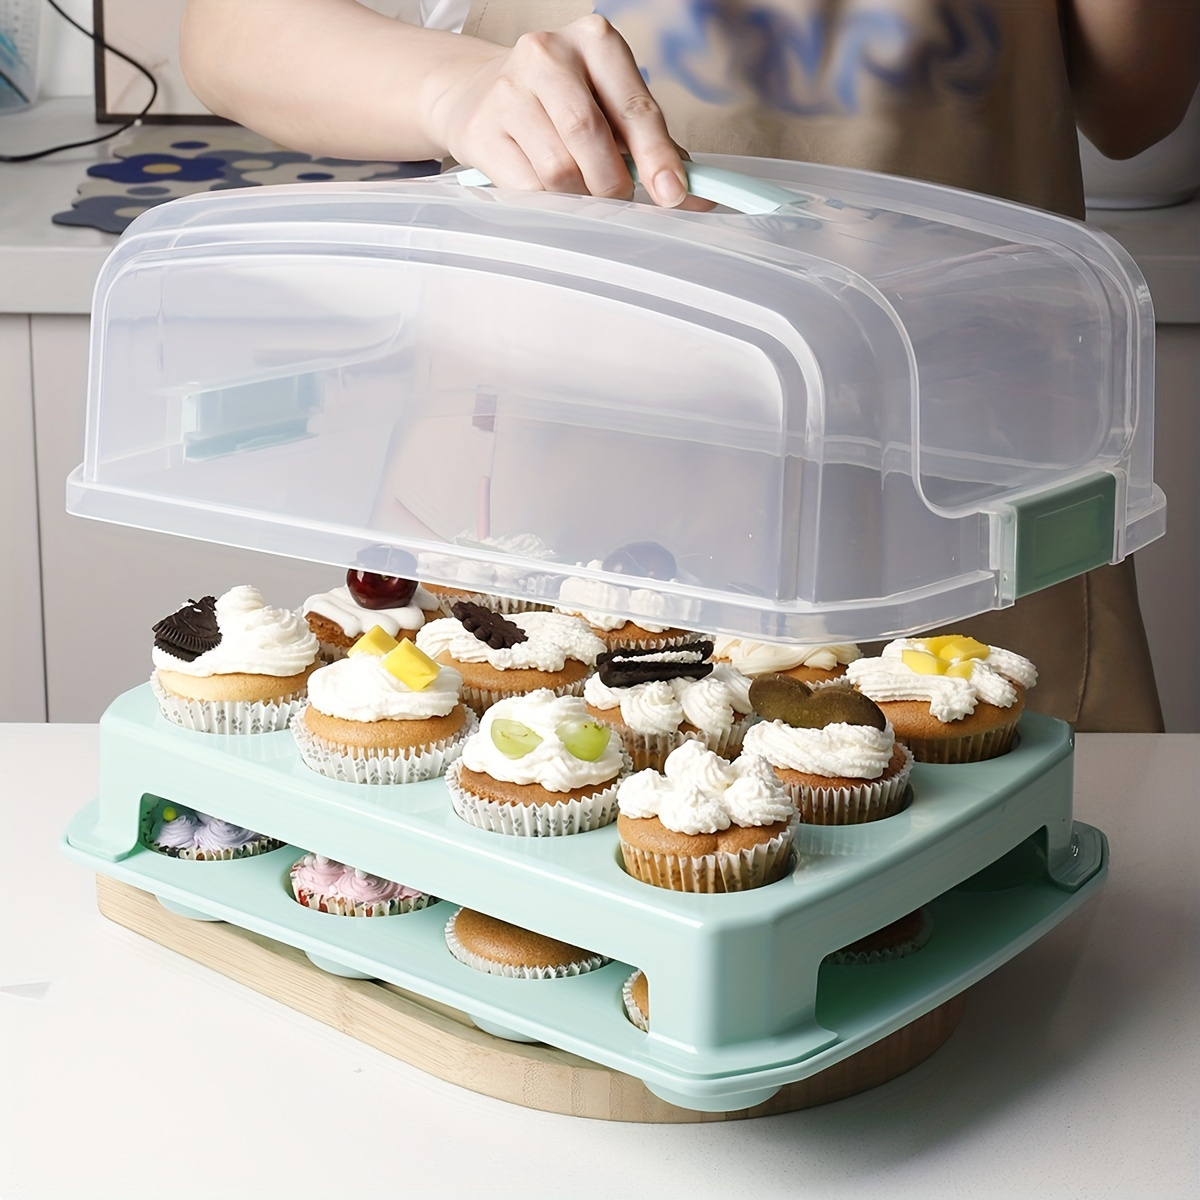 11 Cupcake Carrier Cake Carrier Holder Portable Cupcake